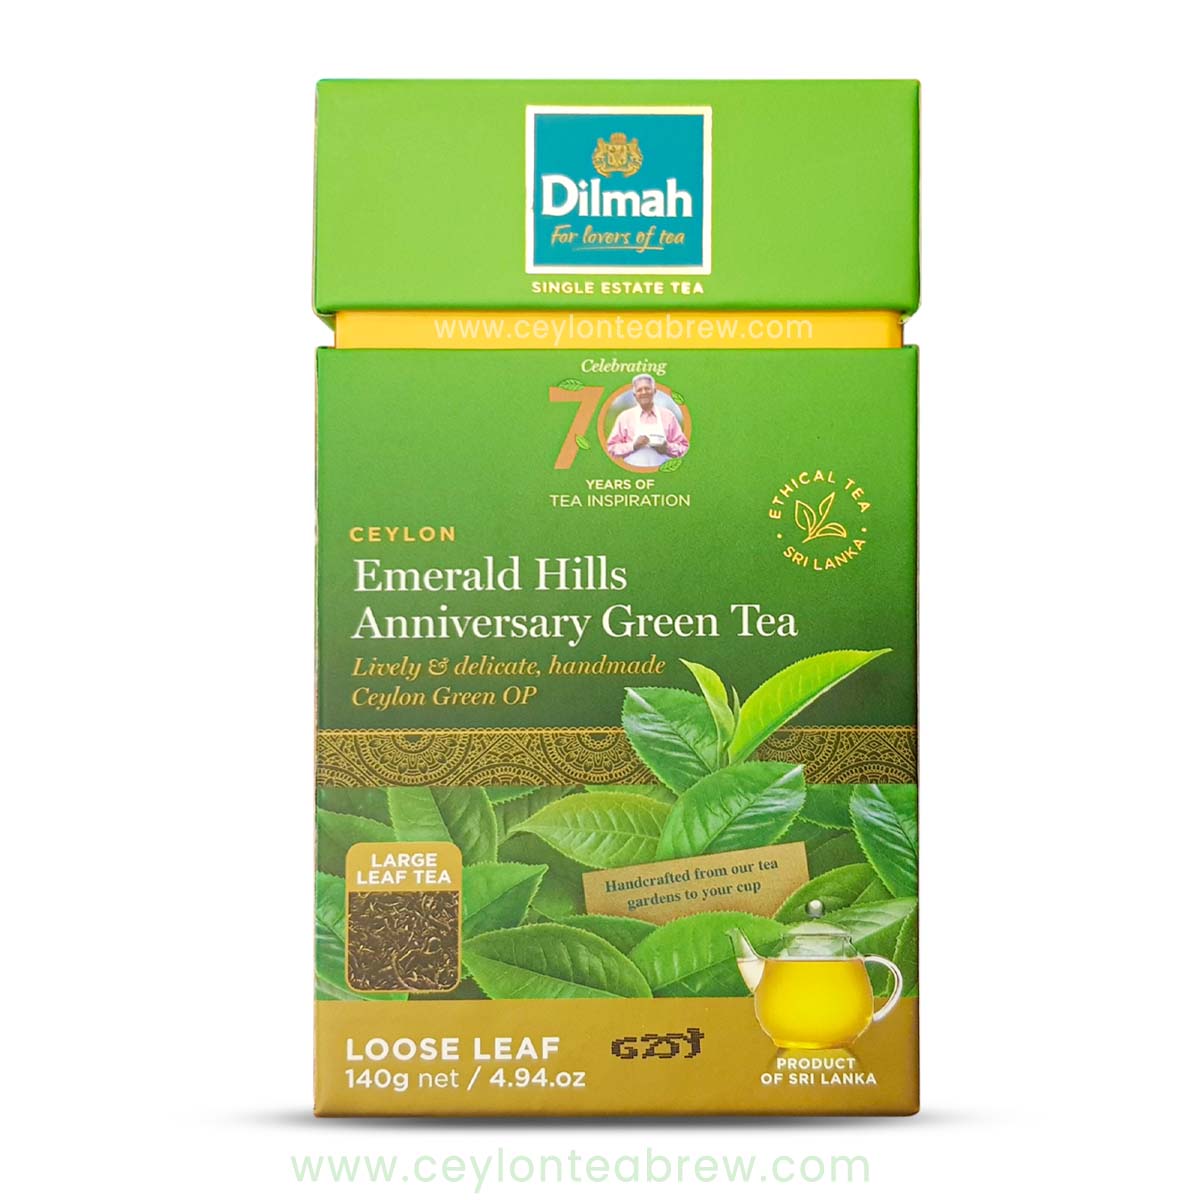 Dilmah Ceylon emerald hills Pure green tea OP large leaf tea